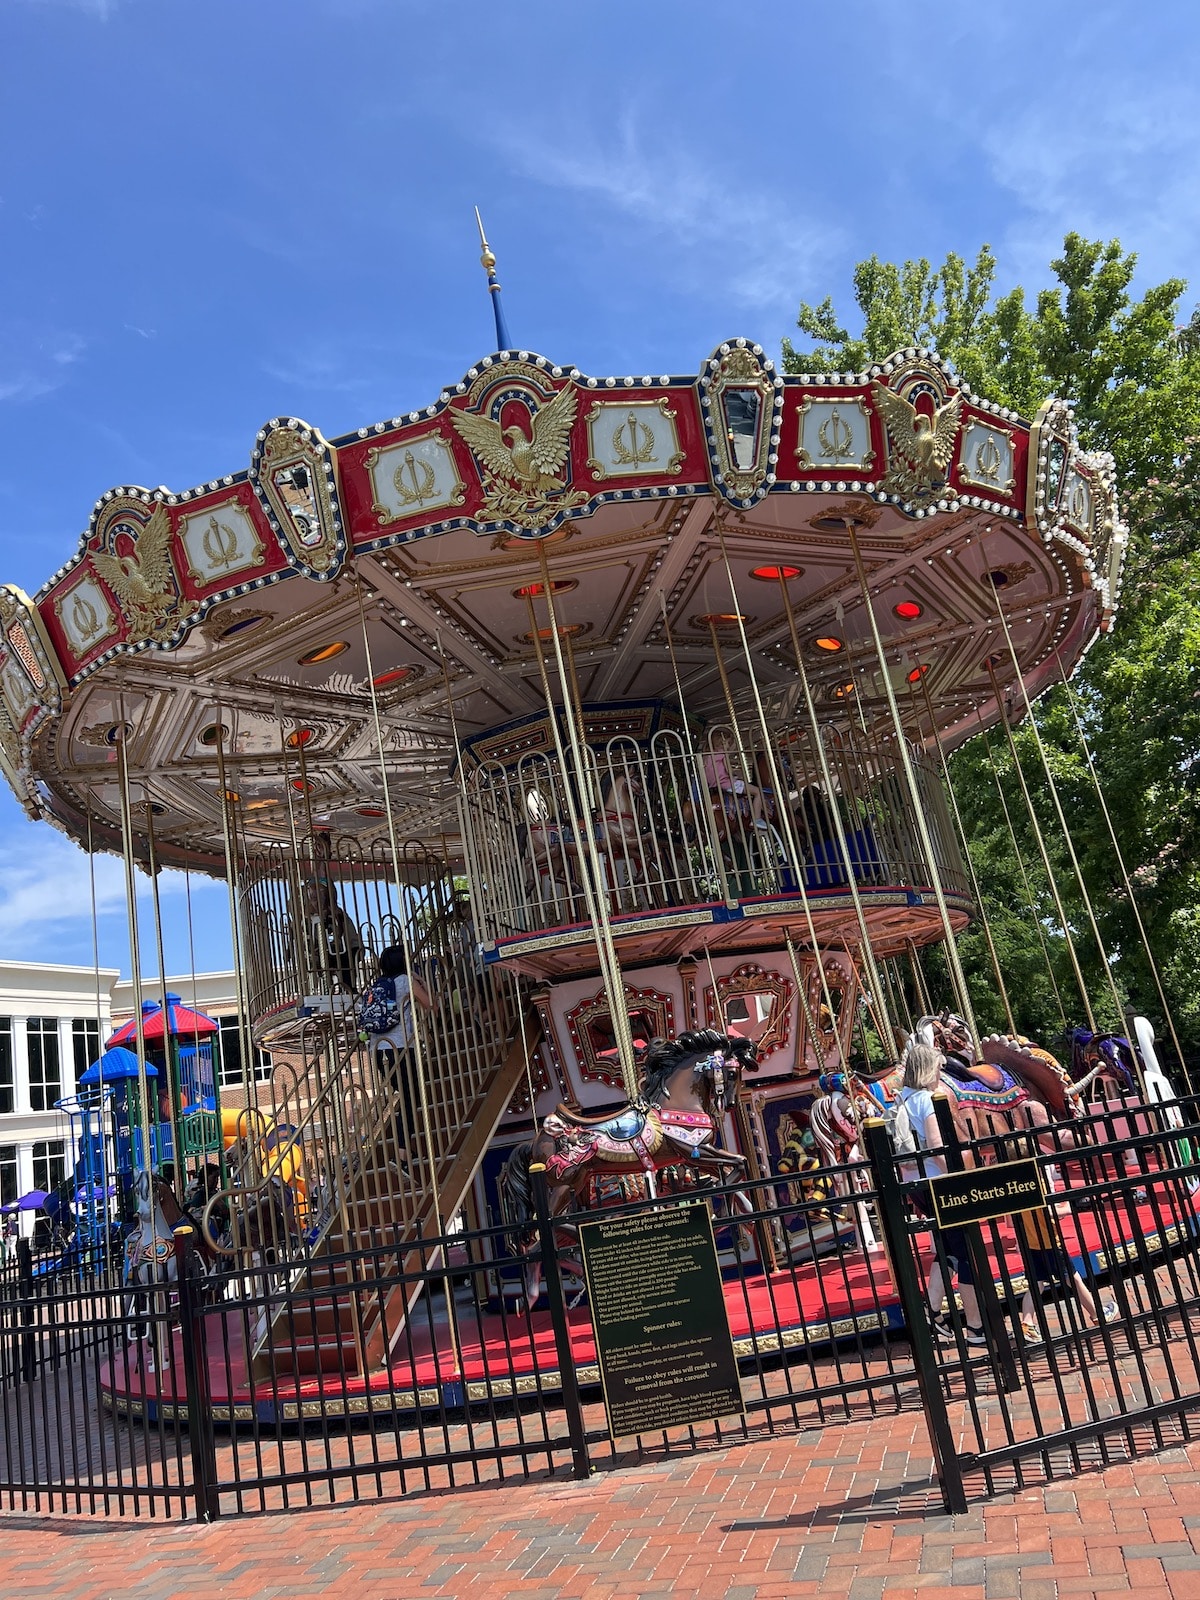 A carousel in a park.